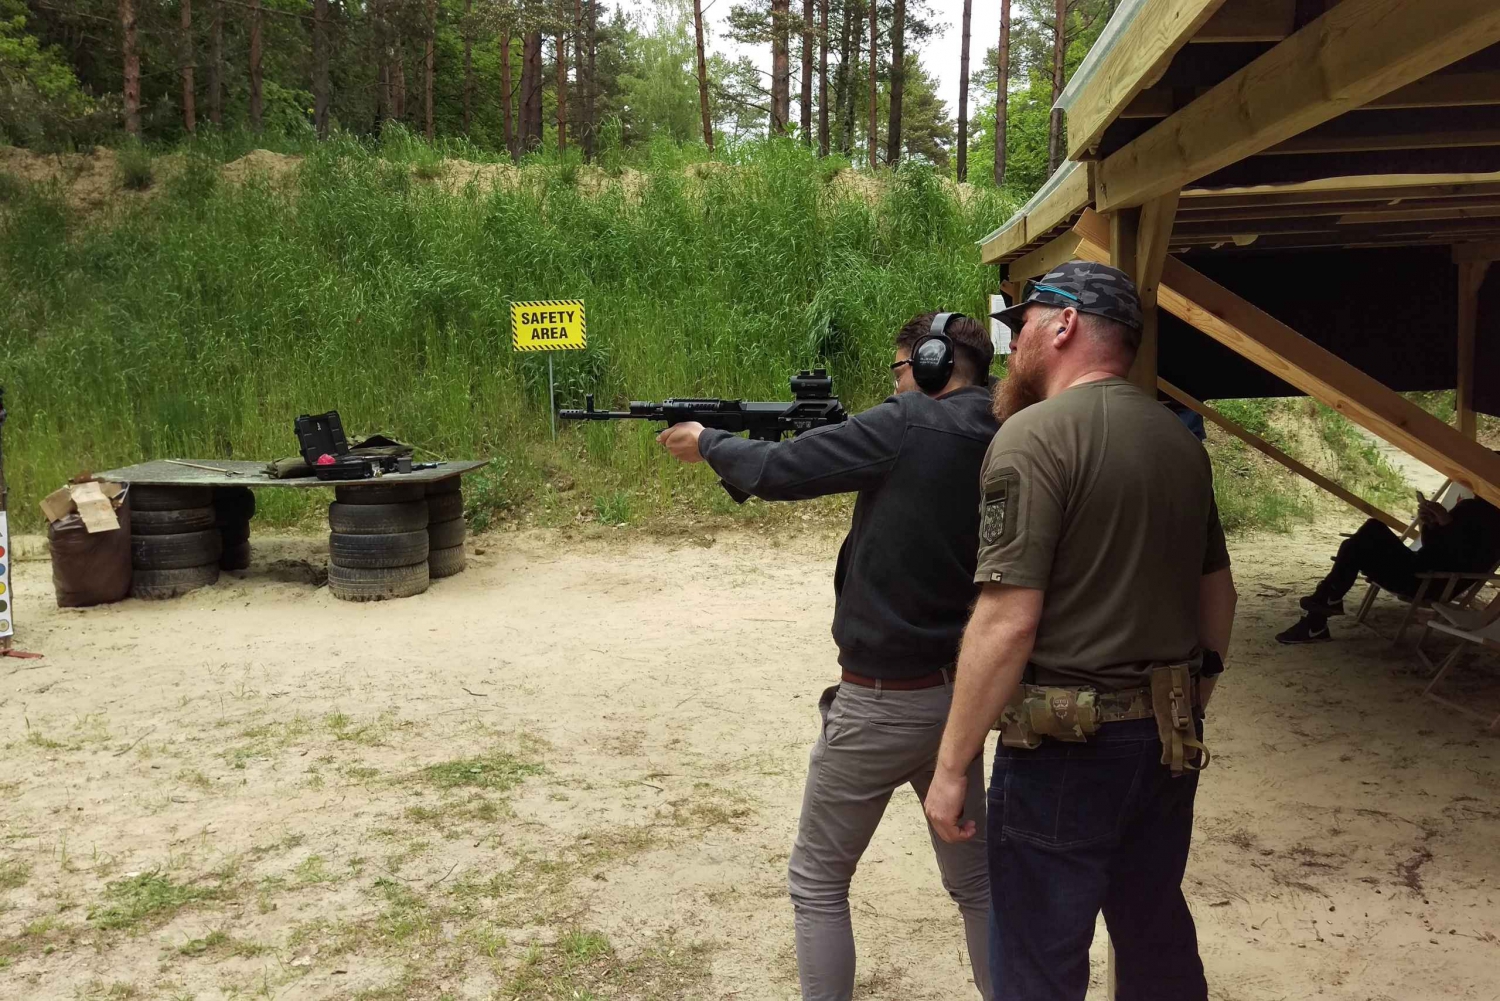 Sopot: Shooting Range Experience